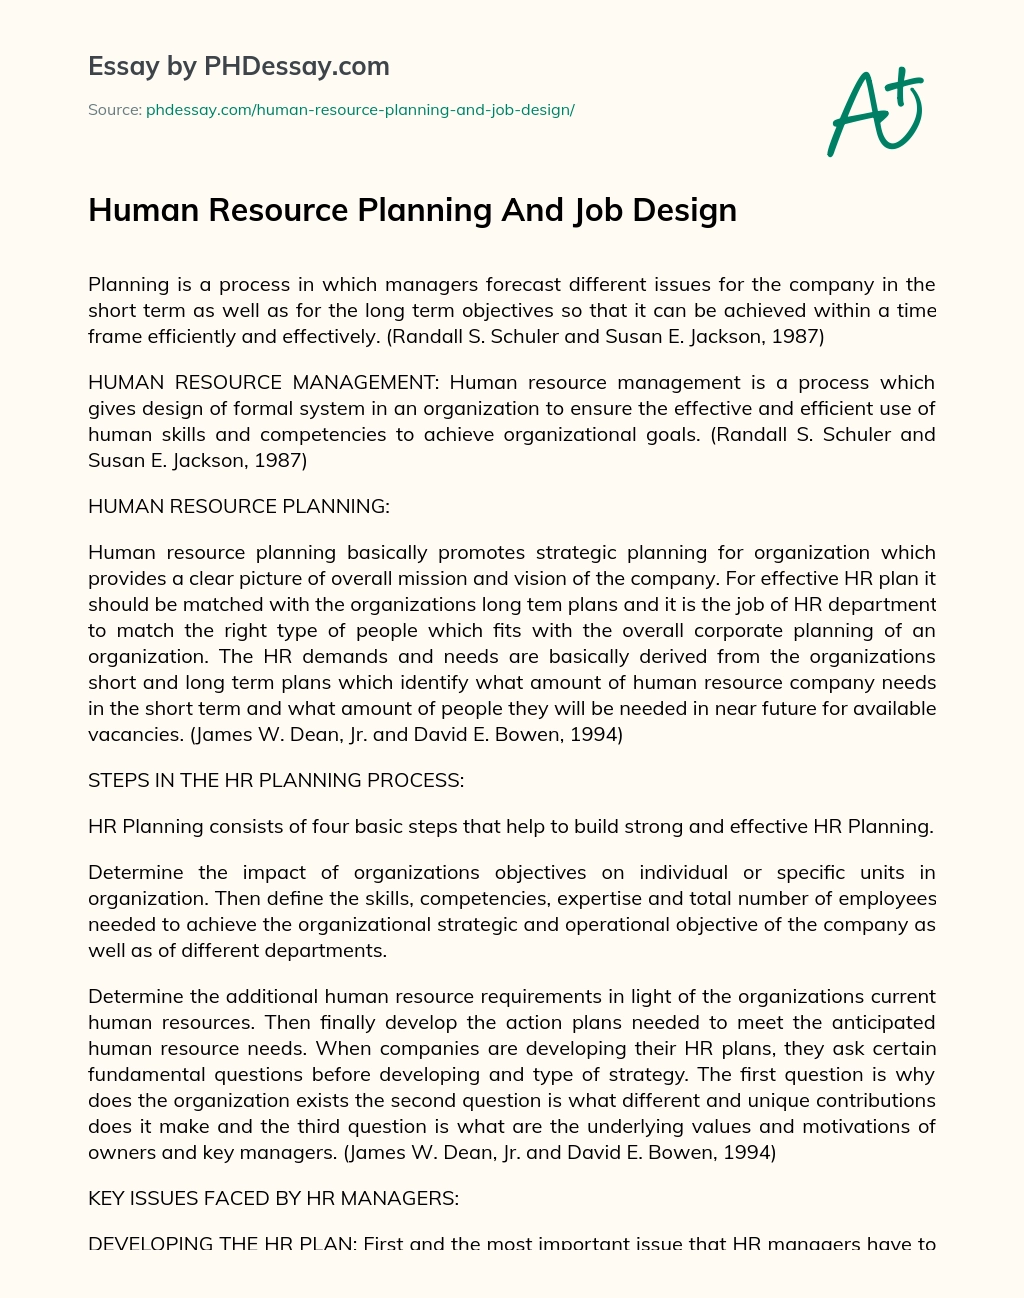 Human Resource Planning And Job Design essay